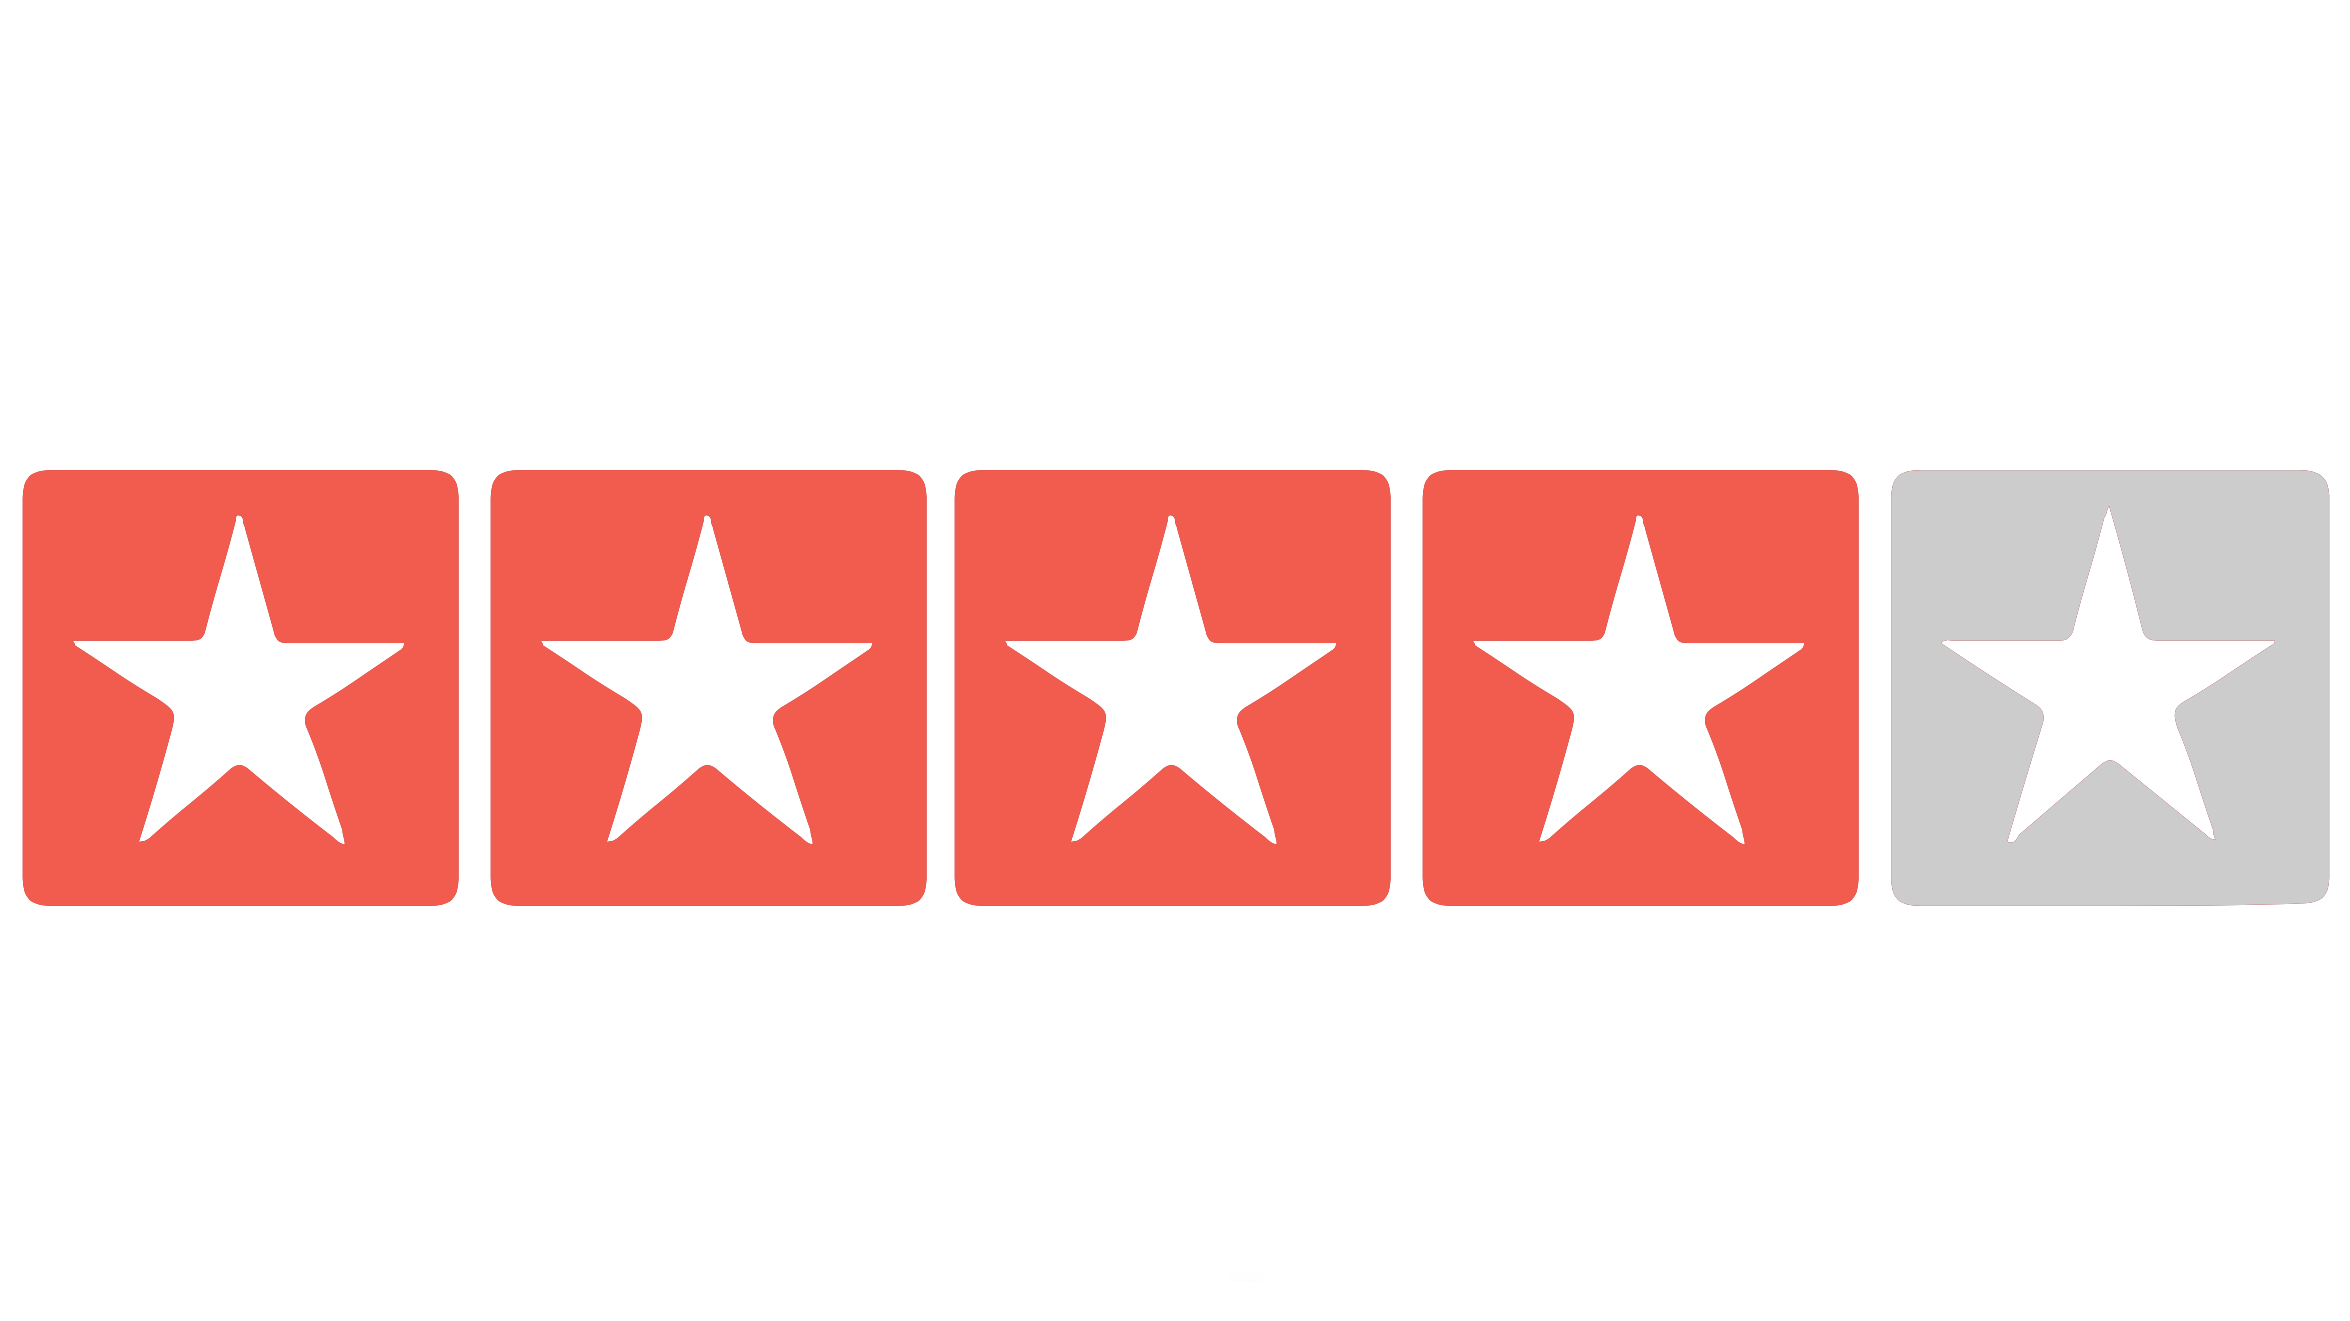 Chris G’s Best Yelp Reviews: Sparadise – 4/5 Stars